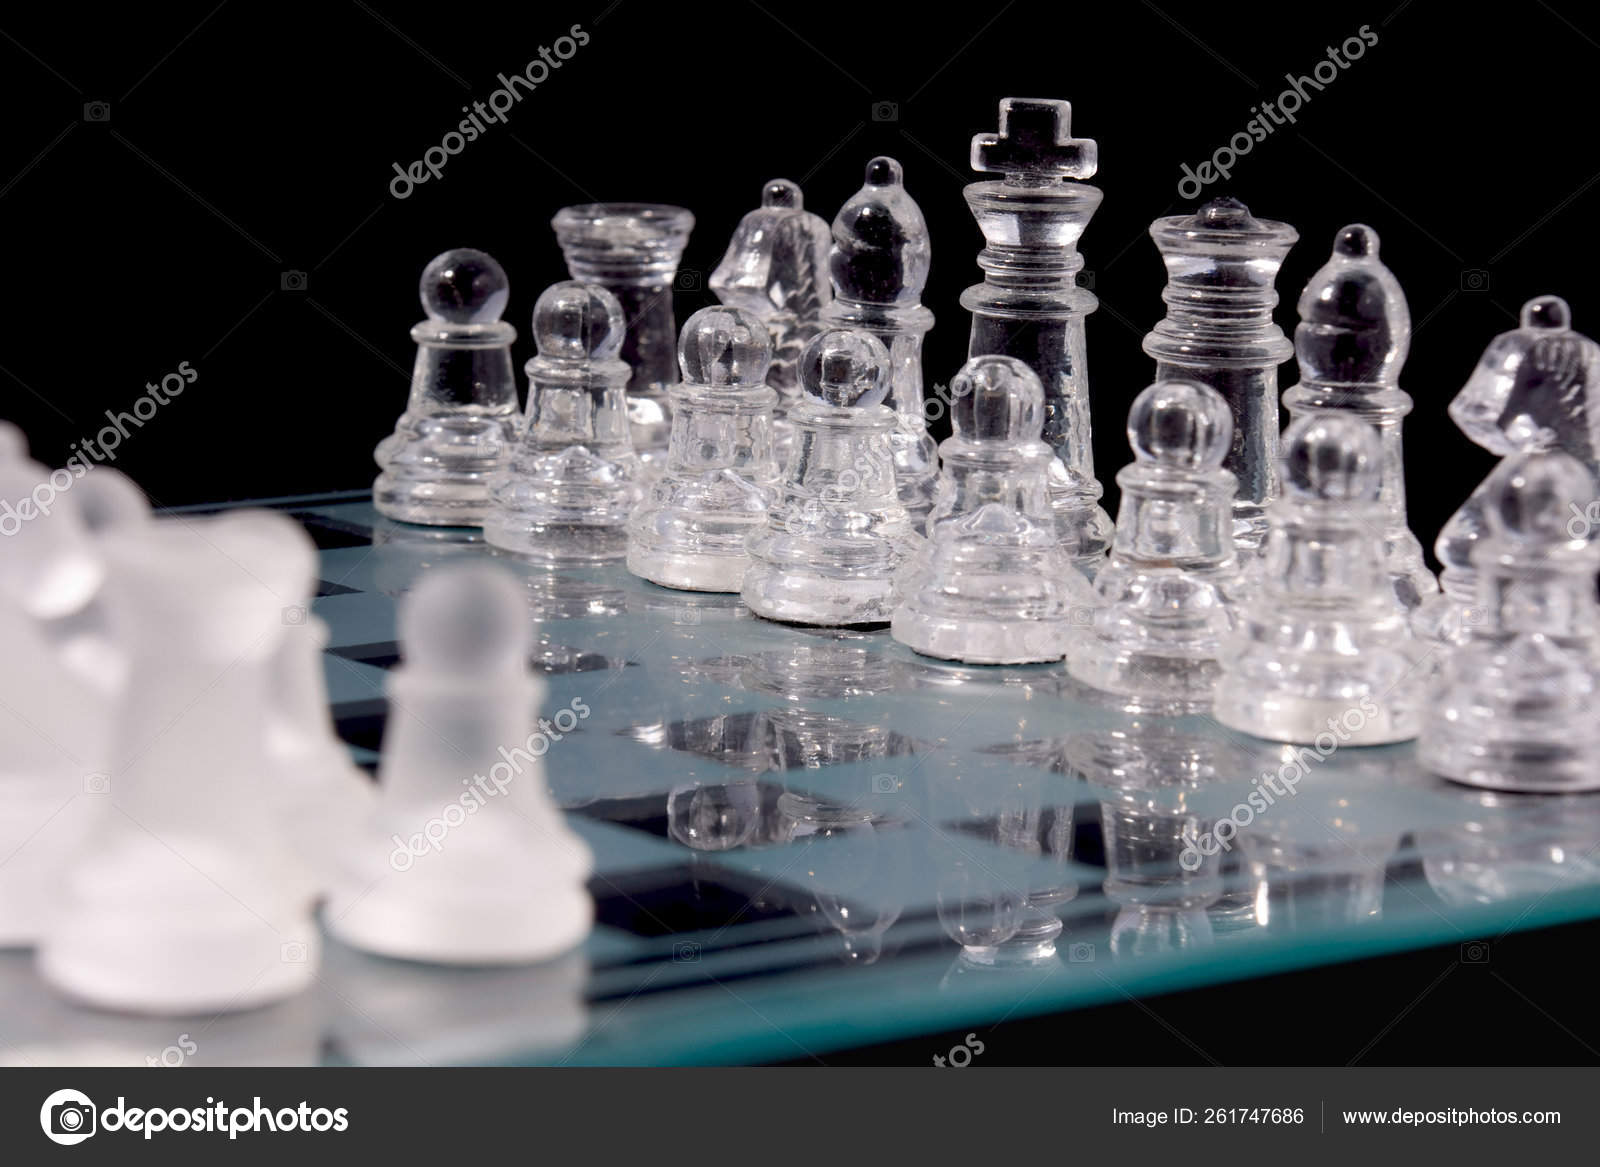 Jogo de xadrez em vidro.  Xadrez jogo, Tabuleiro de xadrez, Jogo de xadrez